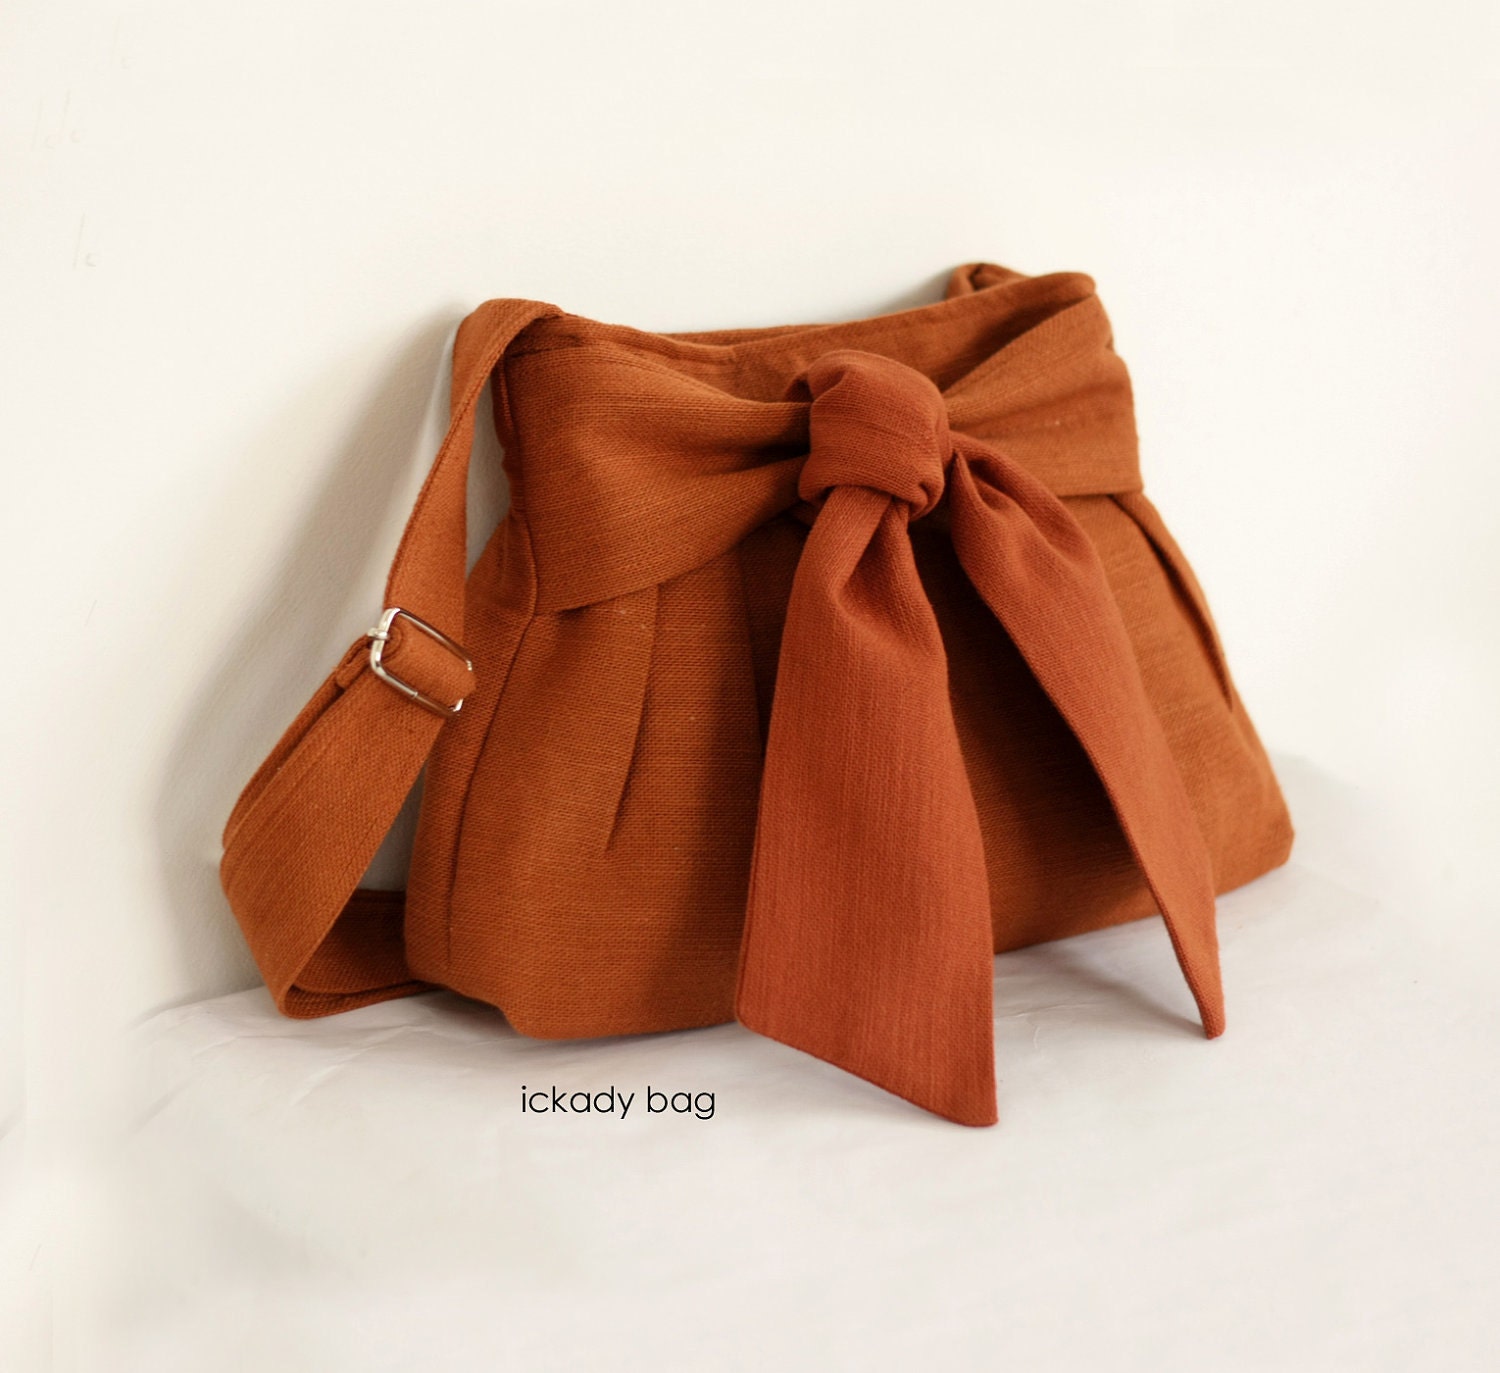 SALE - Cute Bag / Cute Purse / Small Cross body Bag / Day Bag in Burnt Orange Hemp Cotton / Bow / Passport bag - ickadybag